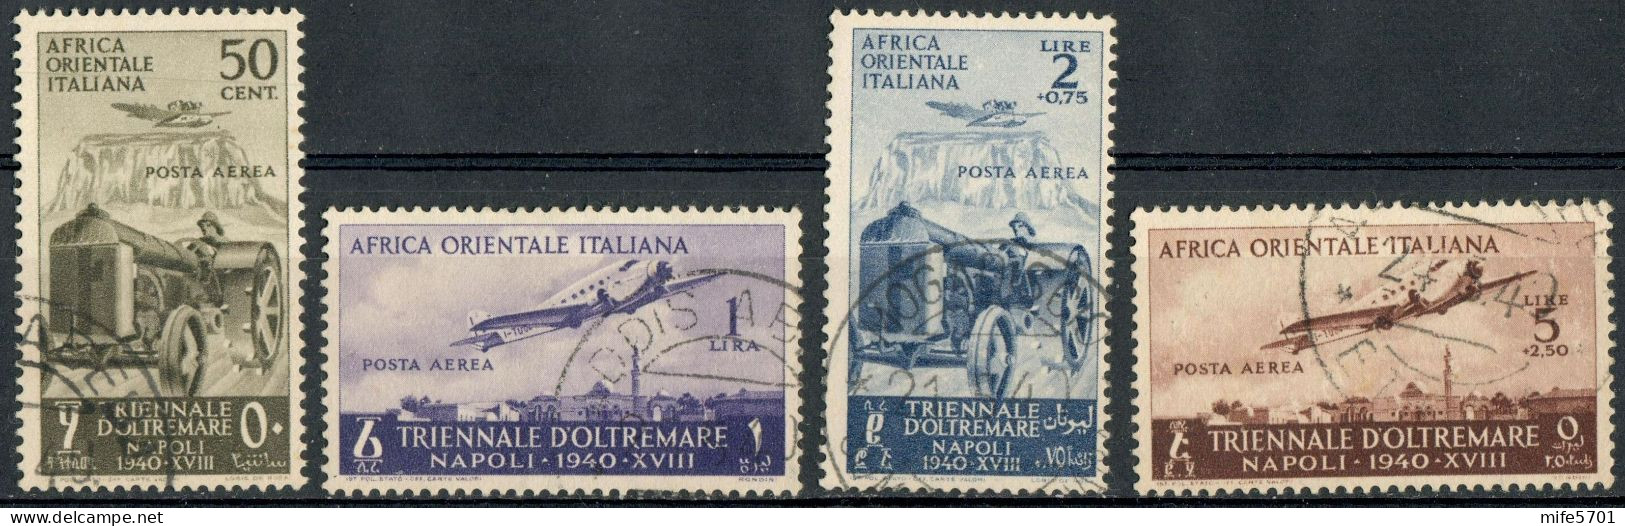 REGNO AFRICA ORIENTALE ITALIANA 1940 A.O.I. SERIE 1ª MOSTRA TRIENNALE D'OLTREMARE POSTA AEREA USATI SASSONE A16/A19 - Italian Eastern Africa